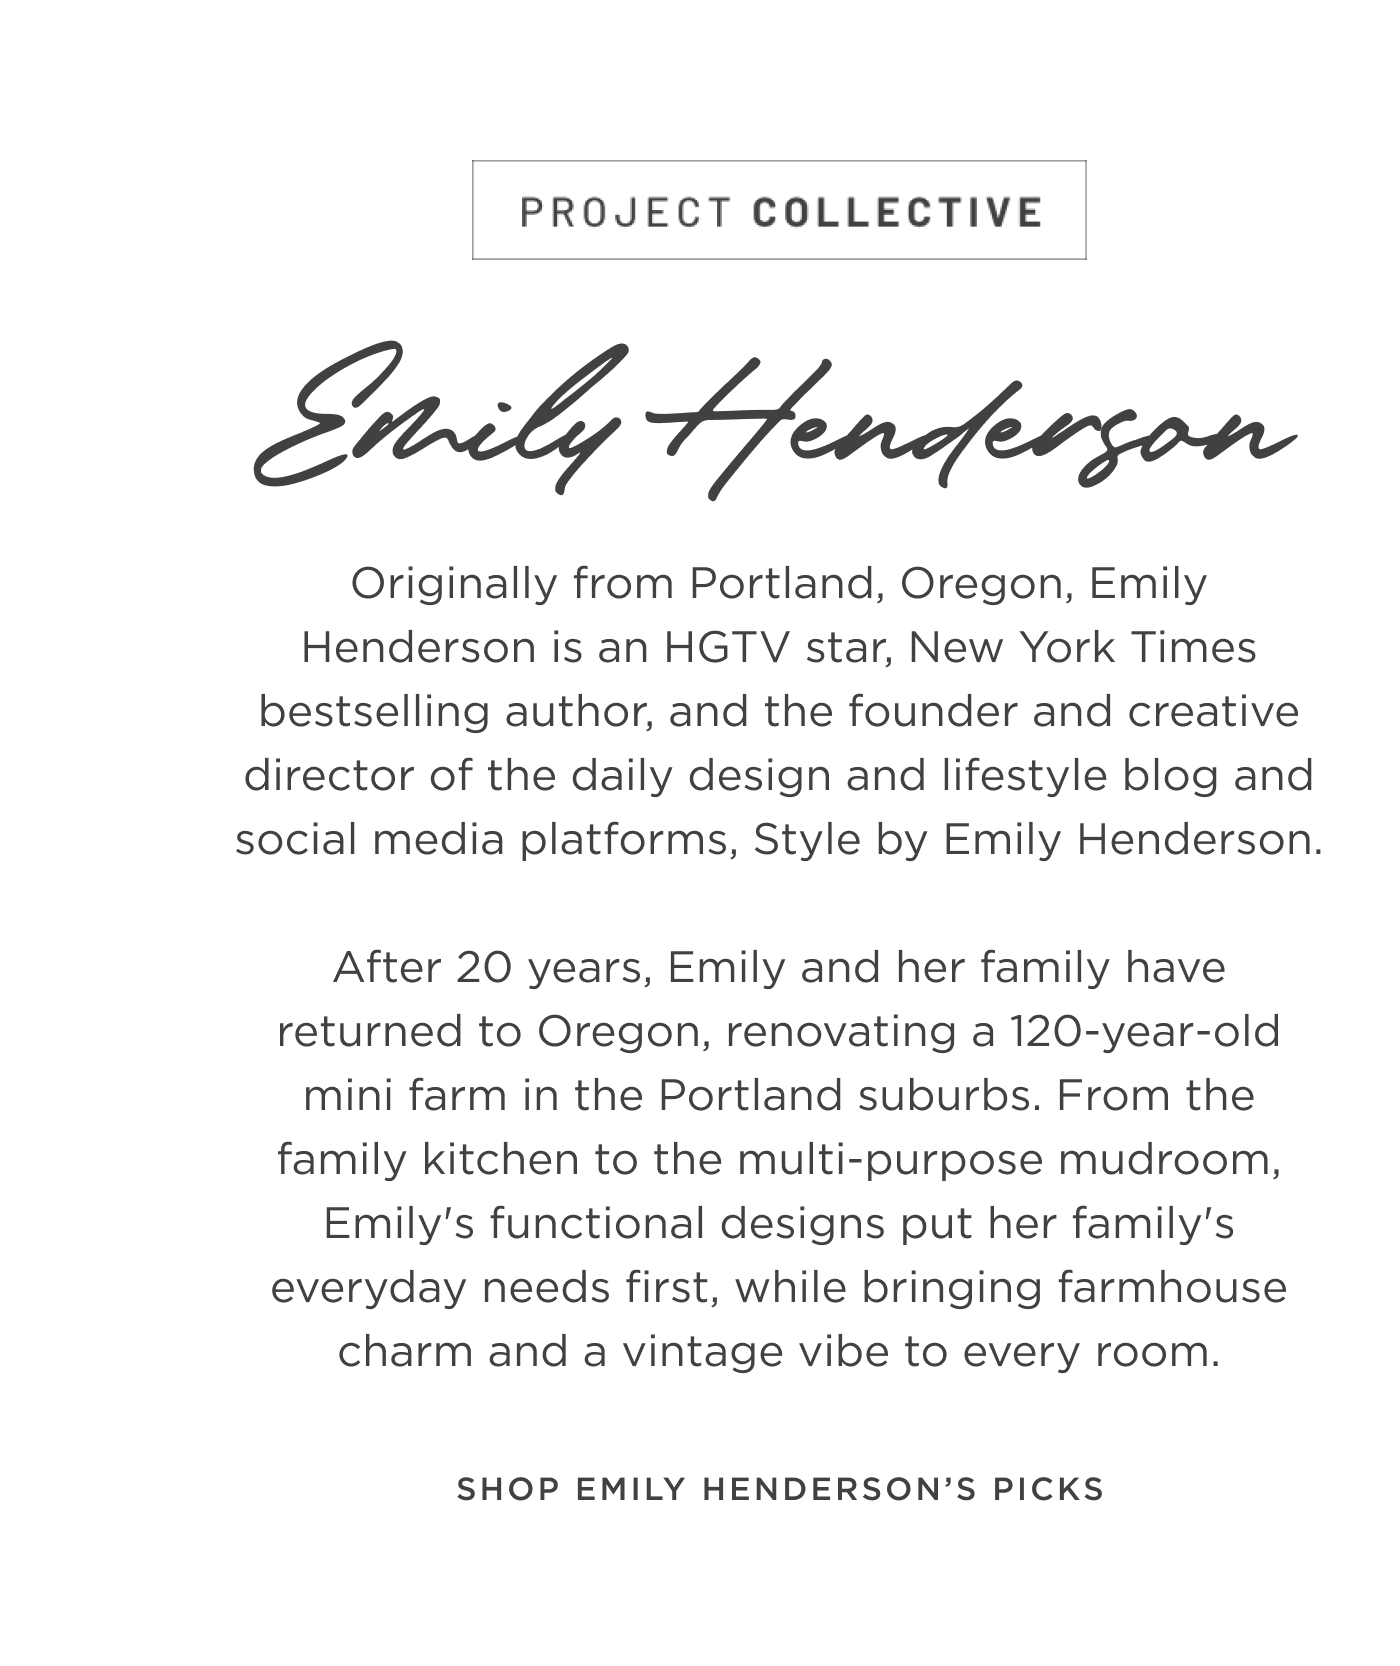 Shop Emily Henderson's Project